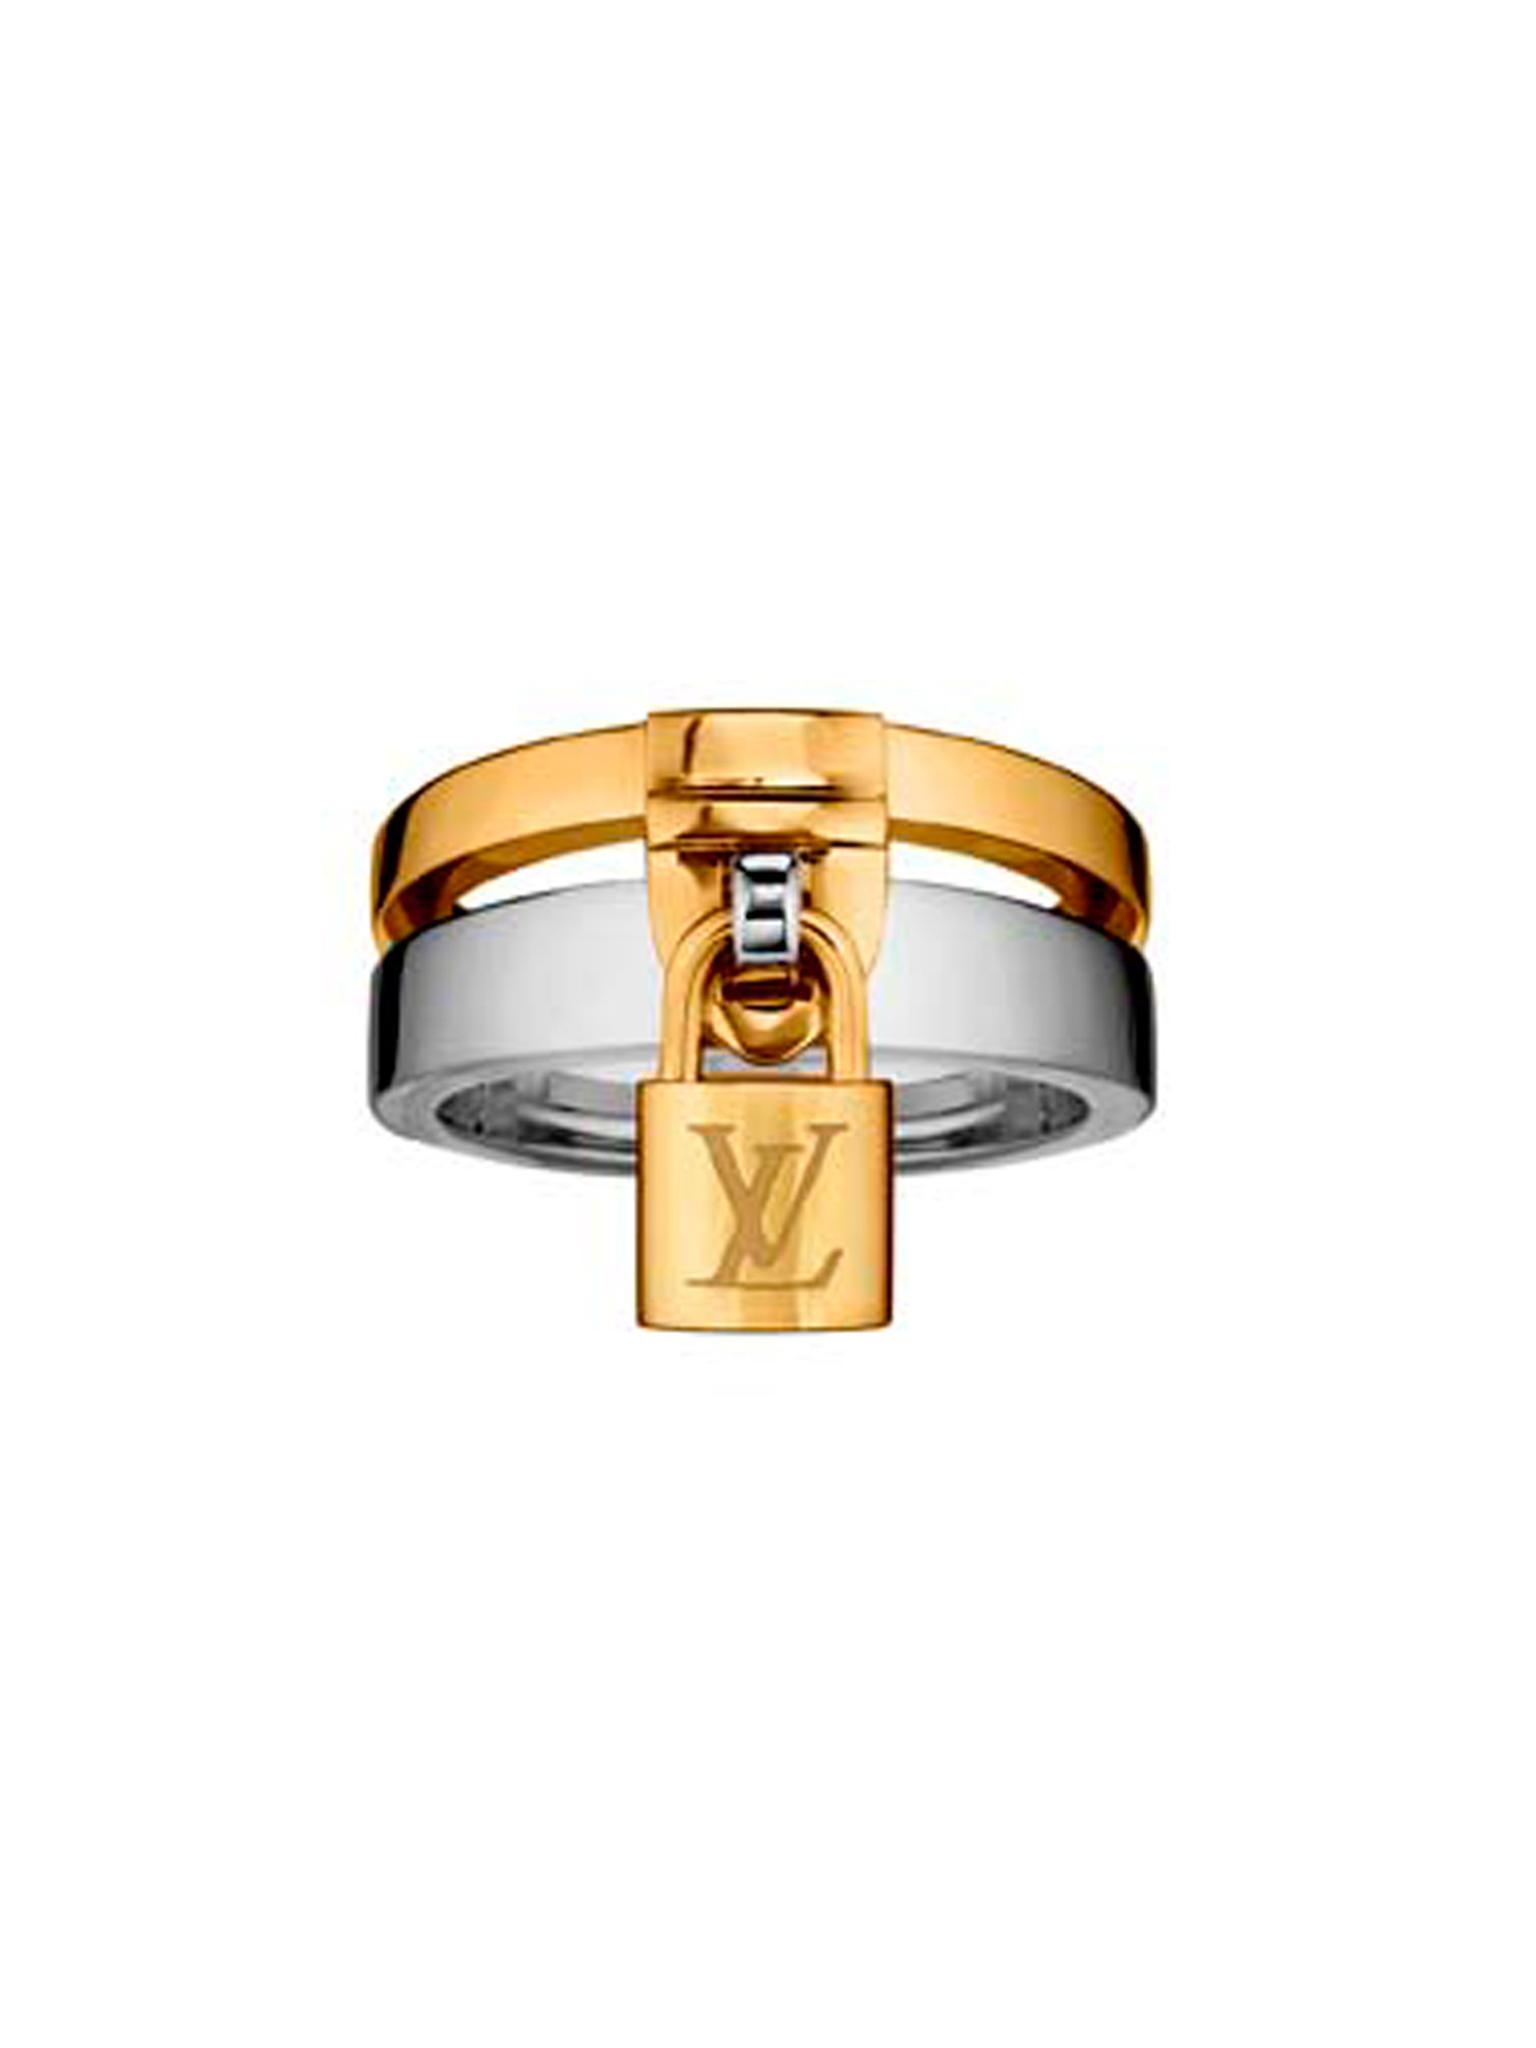 Louis Vuitton White Gold Ring